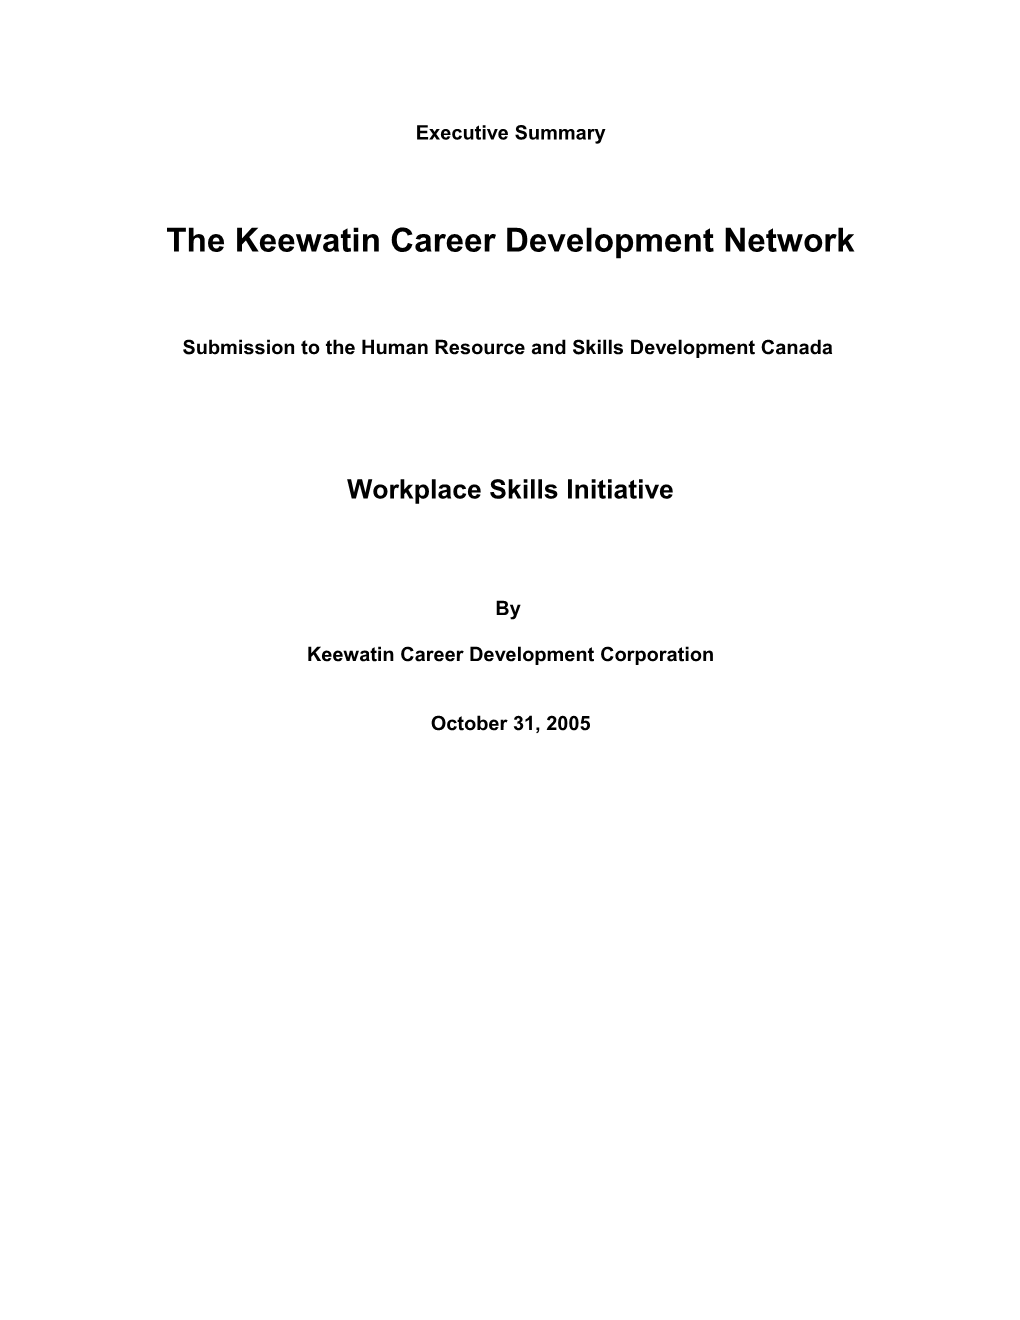 The Keewatin Career Development Network